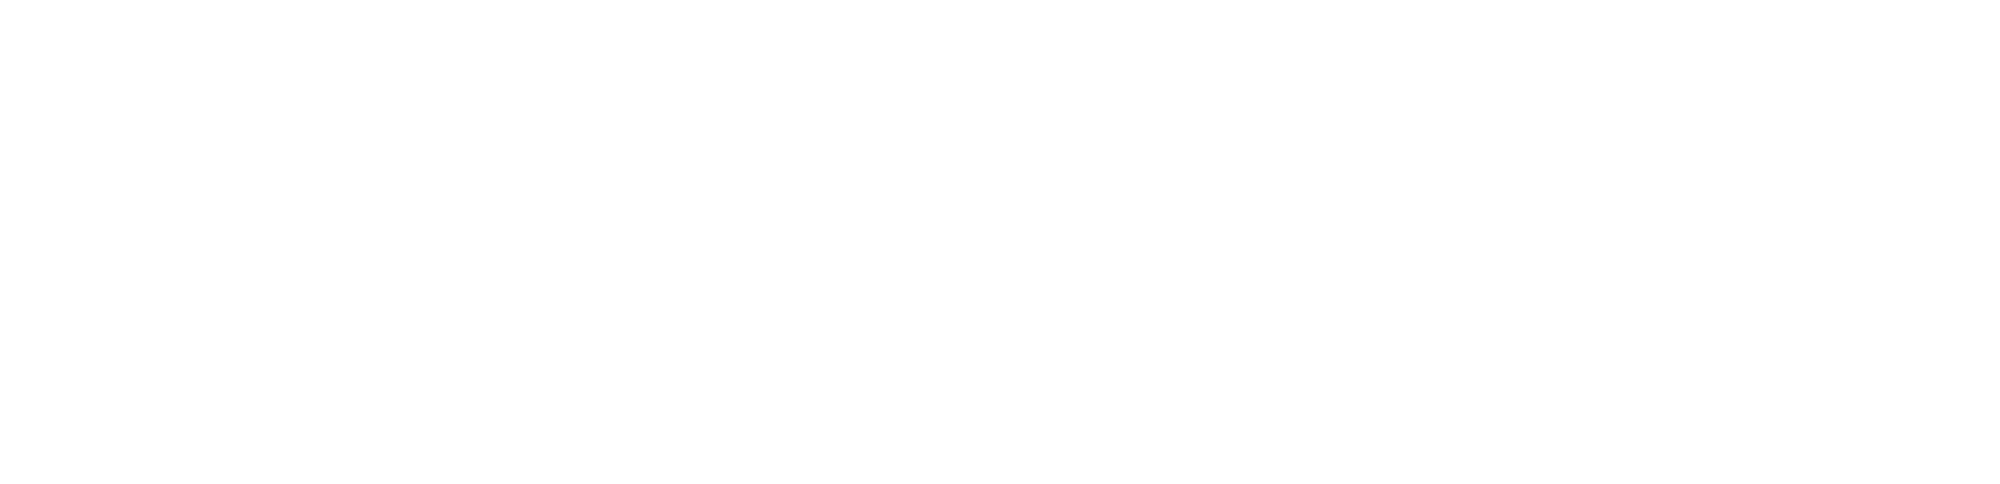 Logo Activision PNG - 97384